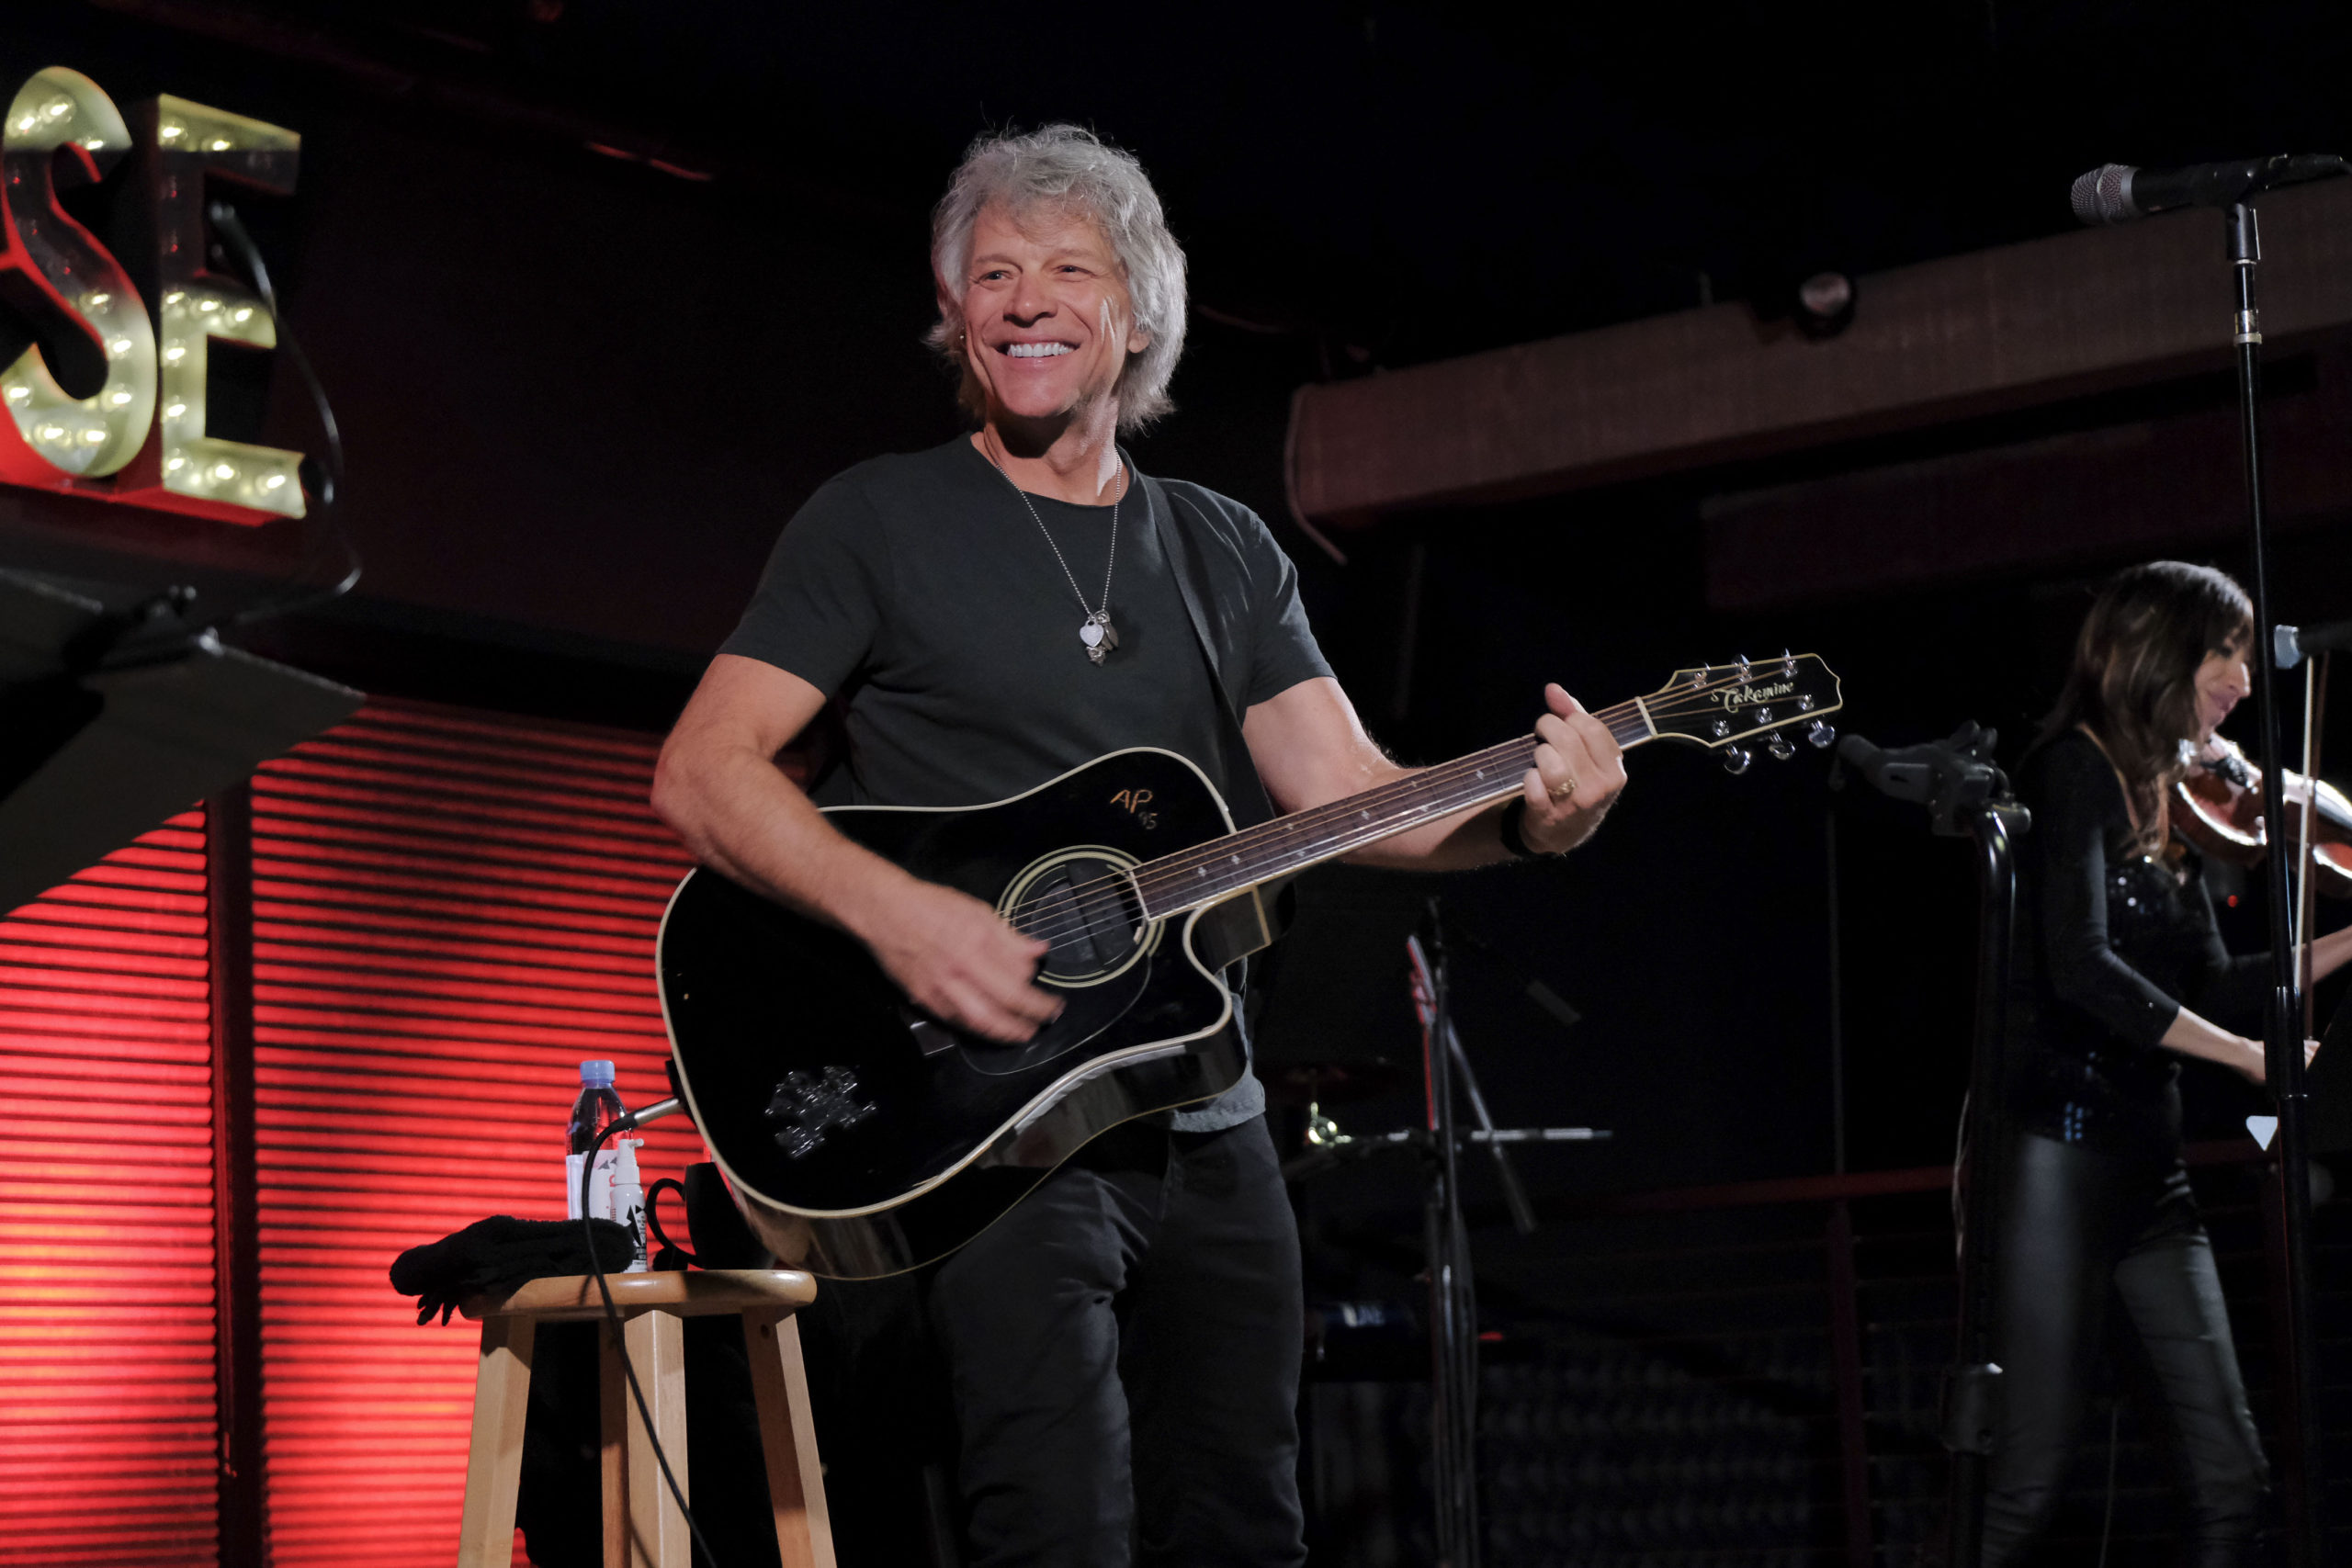 Jon Bon Jovi performing at The Clubhouse.